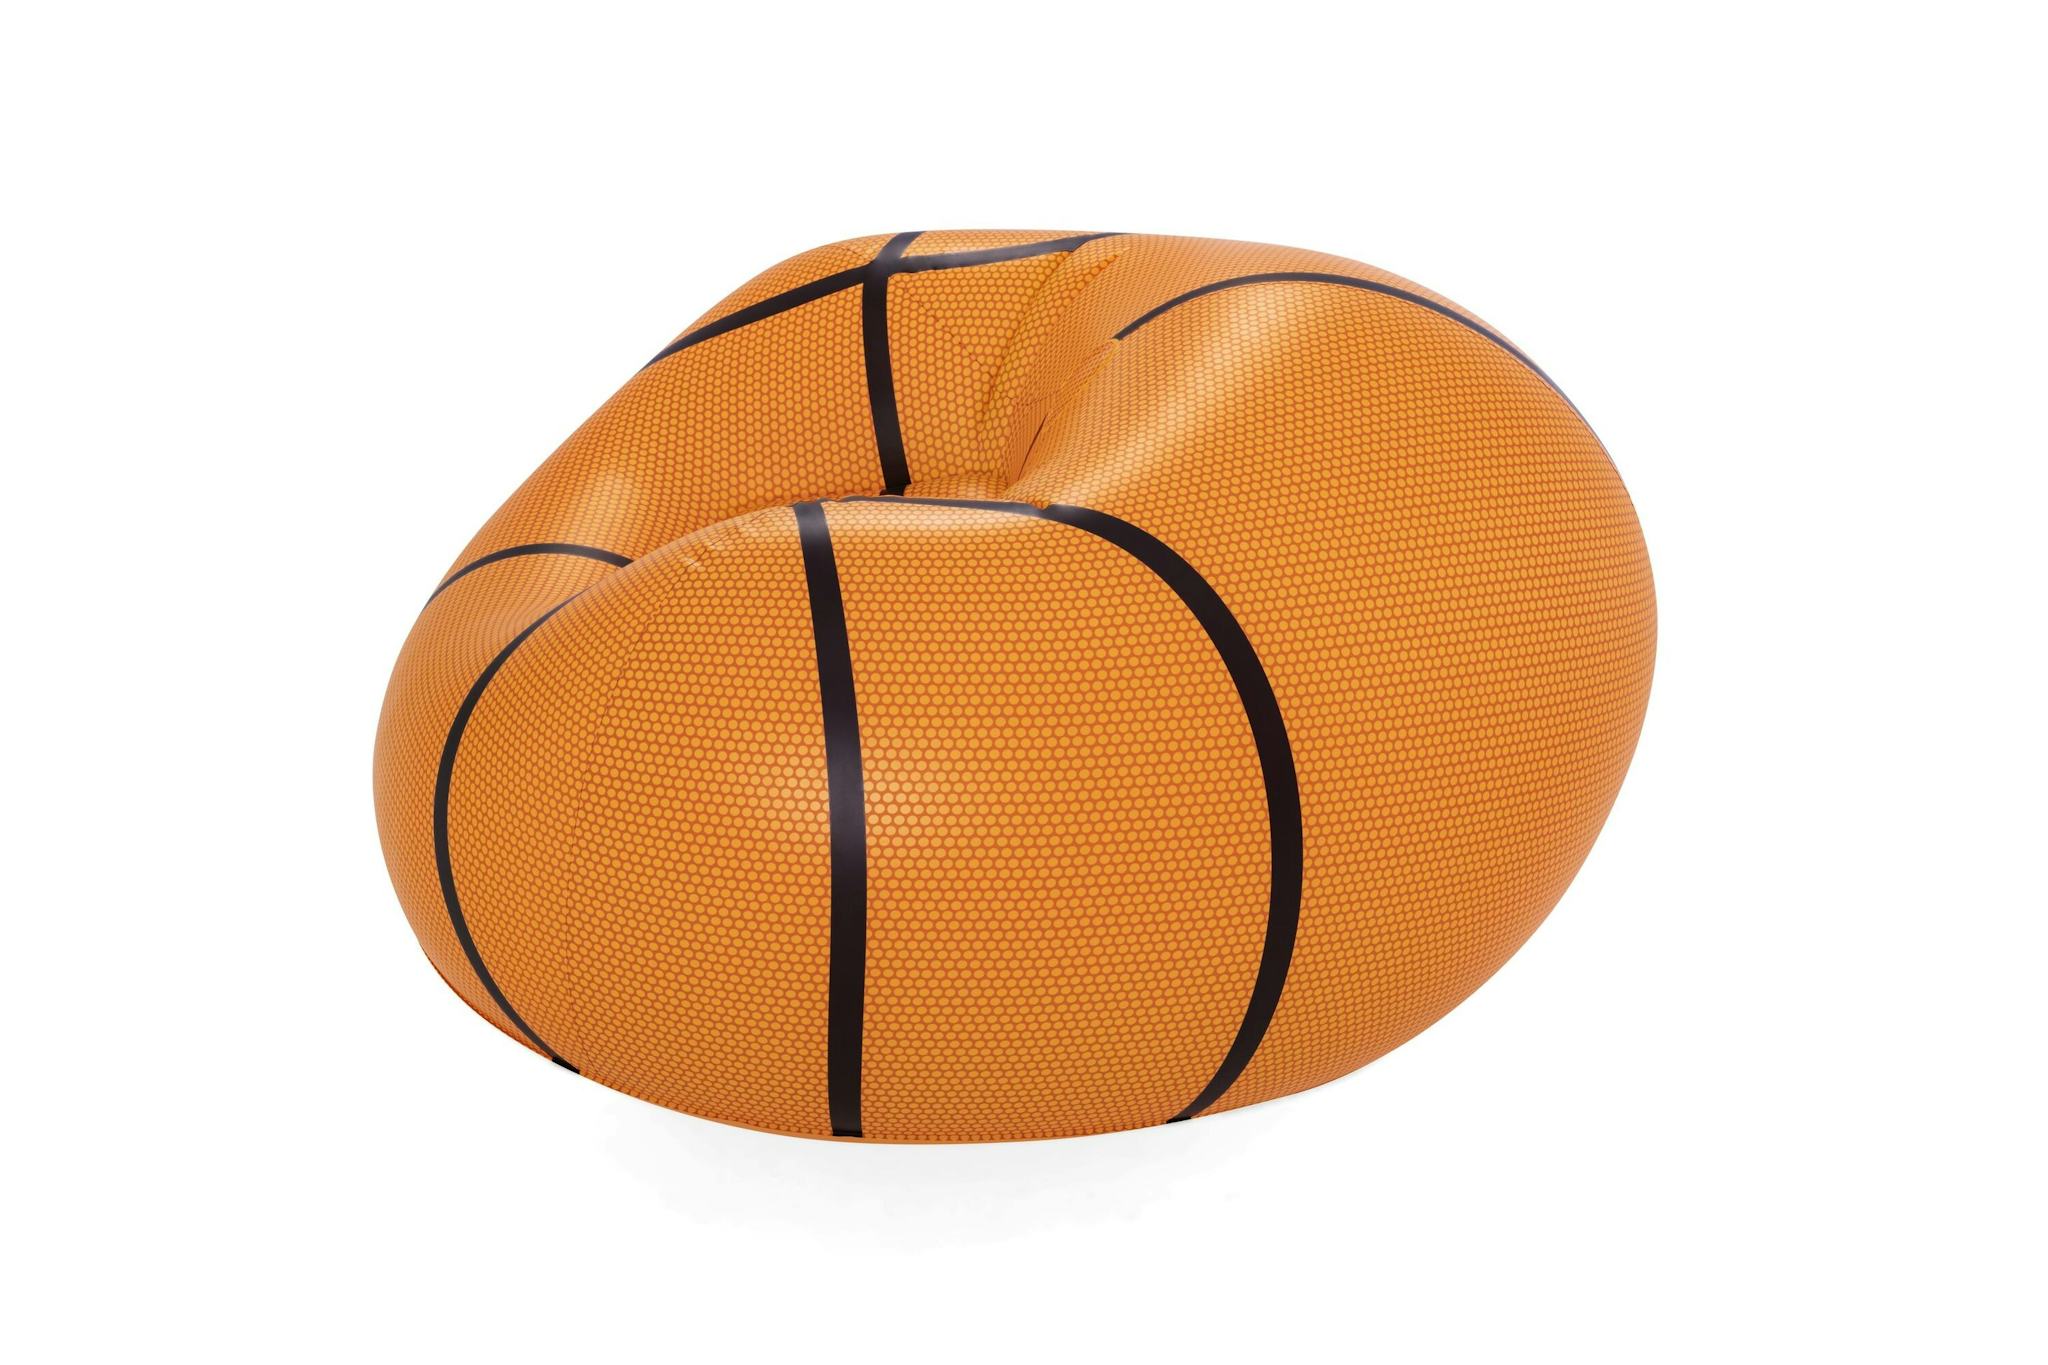 Giochi gonfiabili per bambini Poltrona pouf gonfiabile Basketball Bestway 7